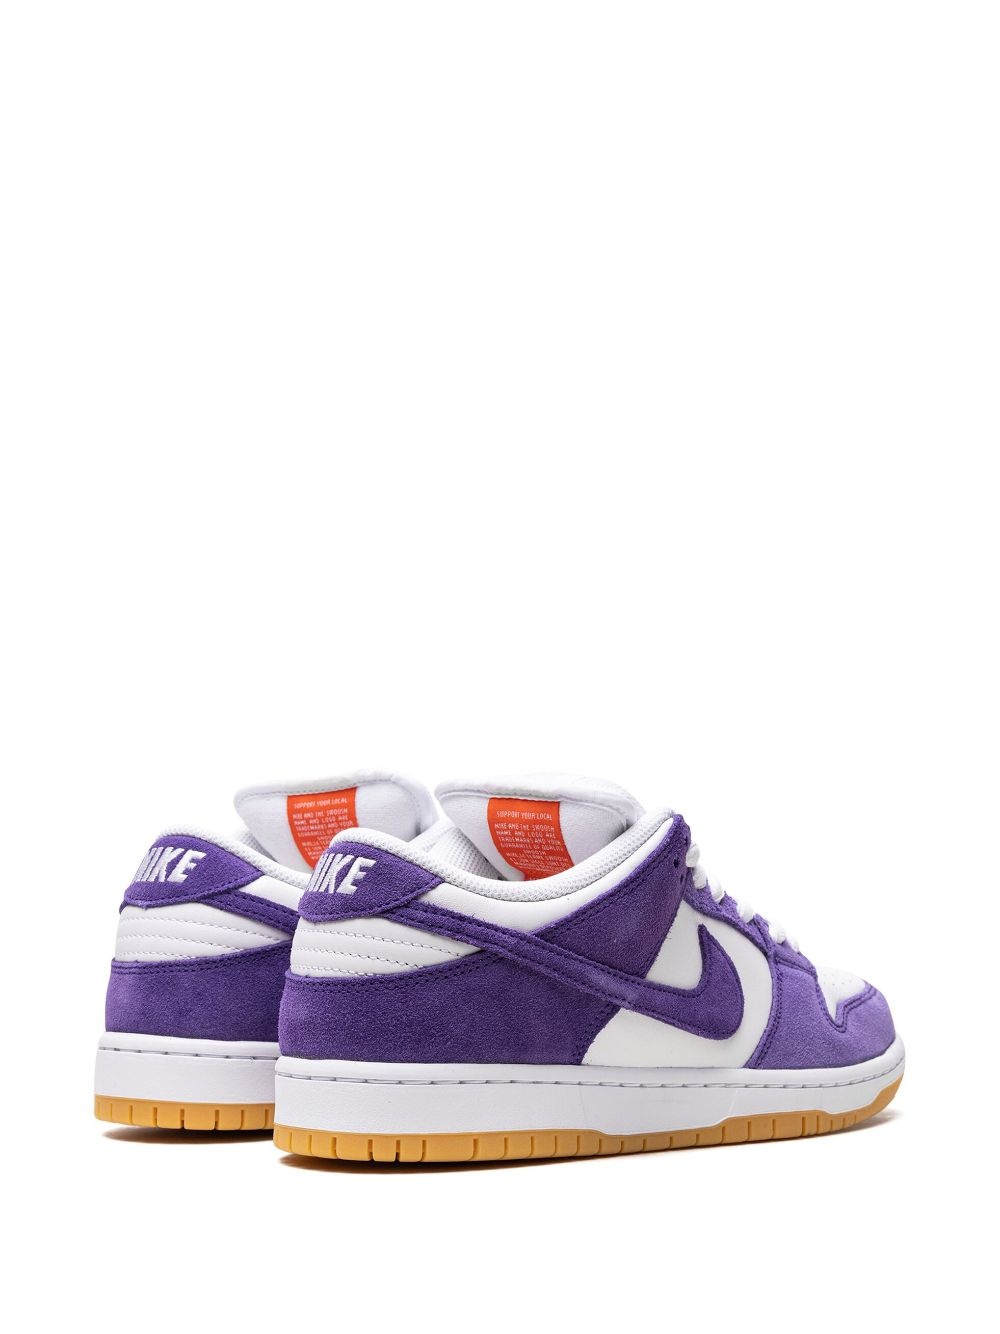 SB Dunk Low Pro ISO "Court Purple" sneakers - 3